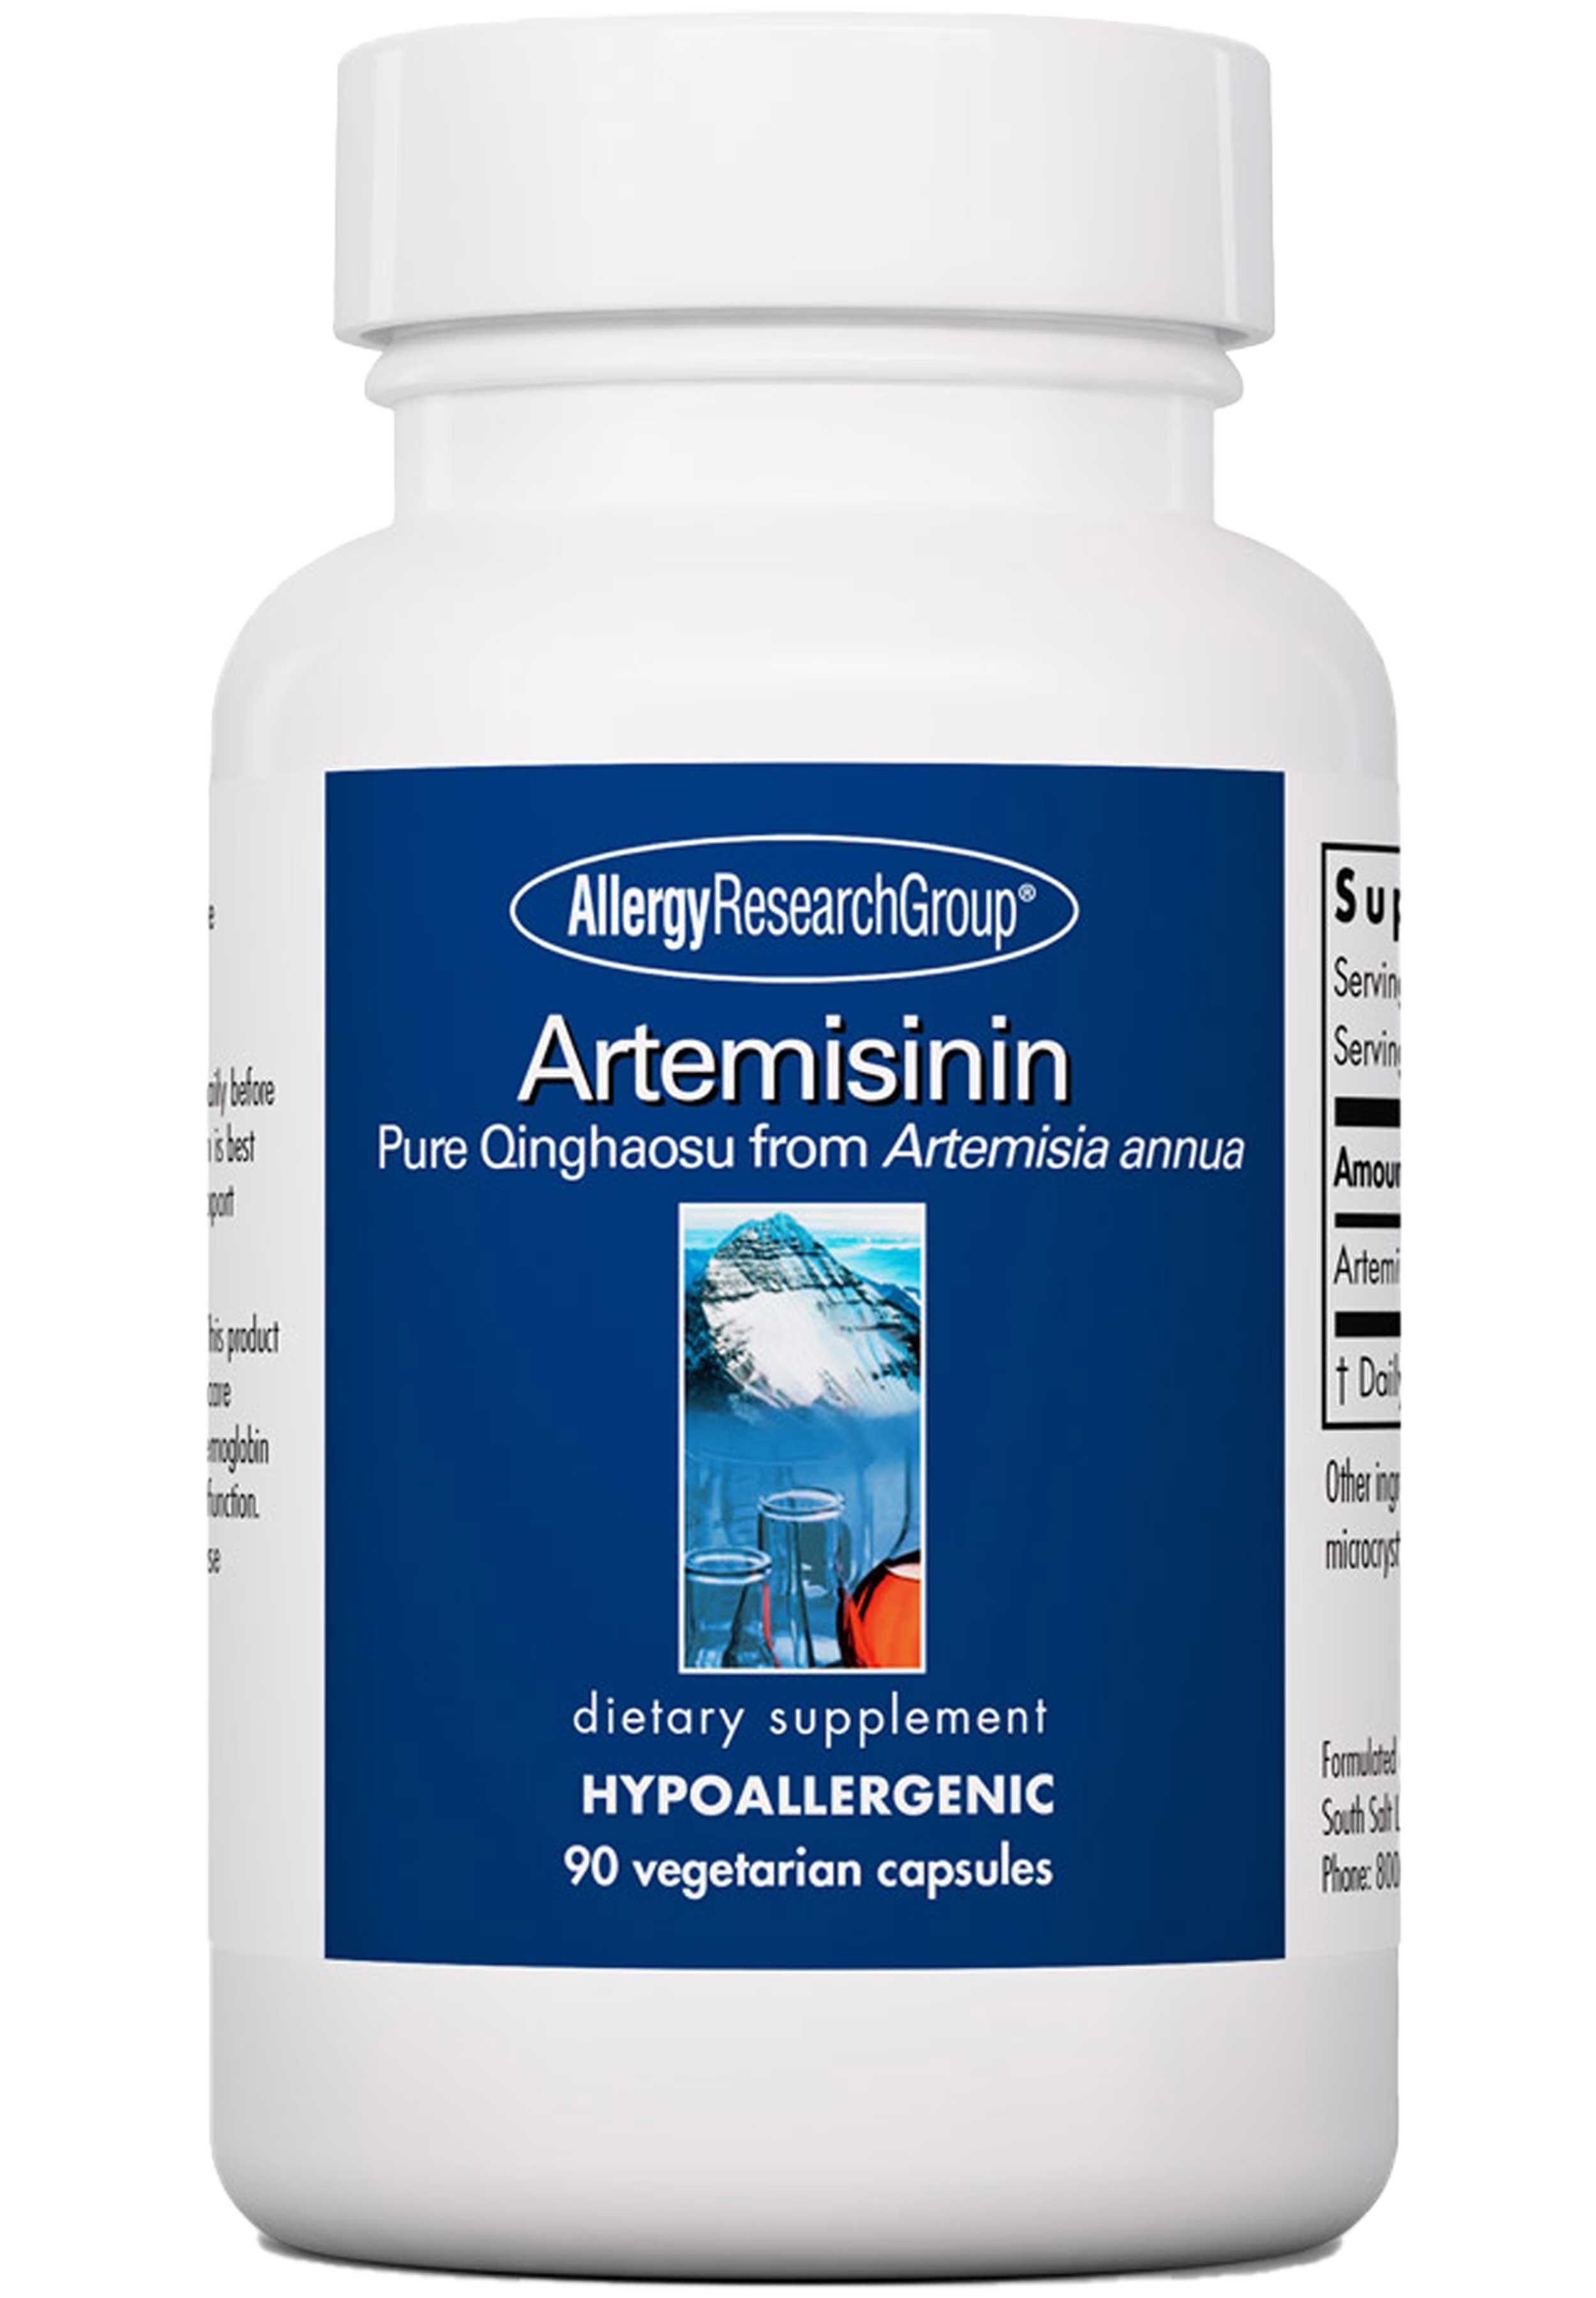 Allergy Research Group Artemisinin